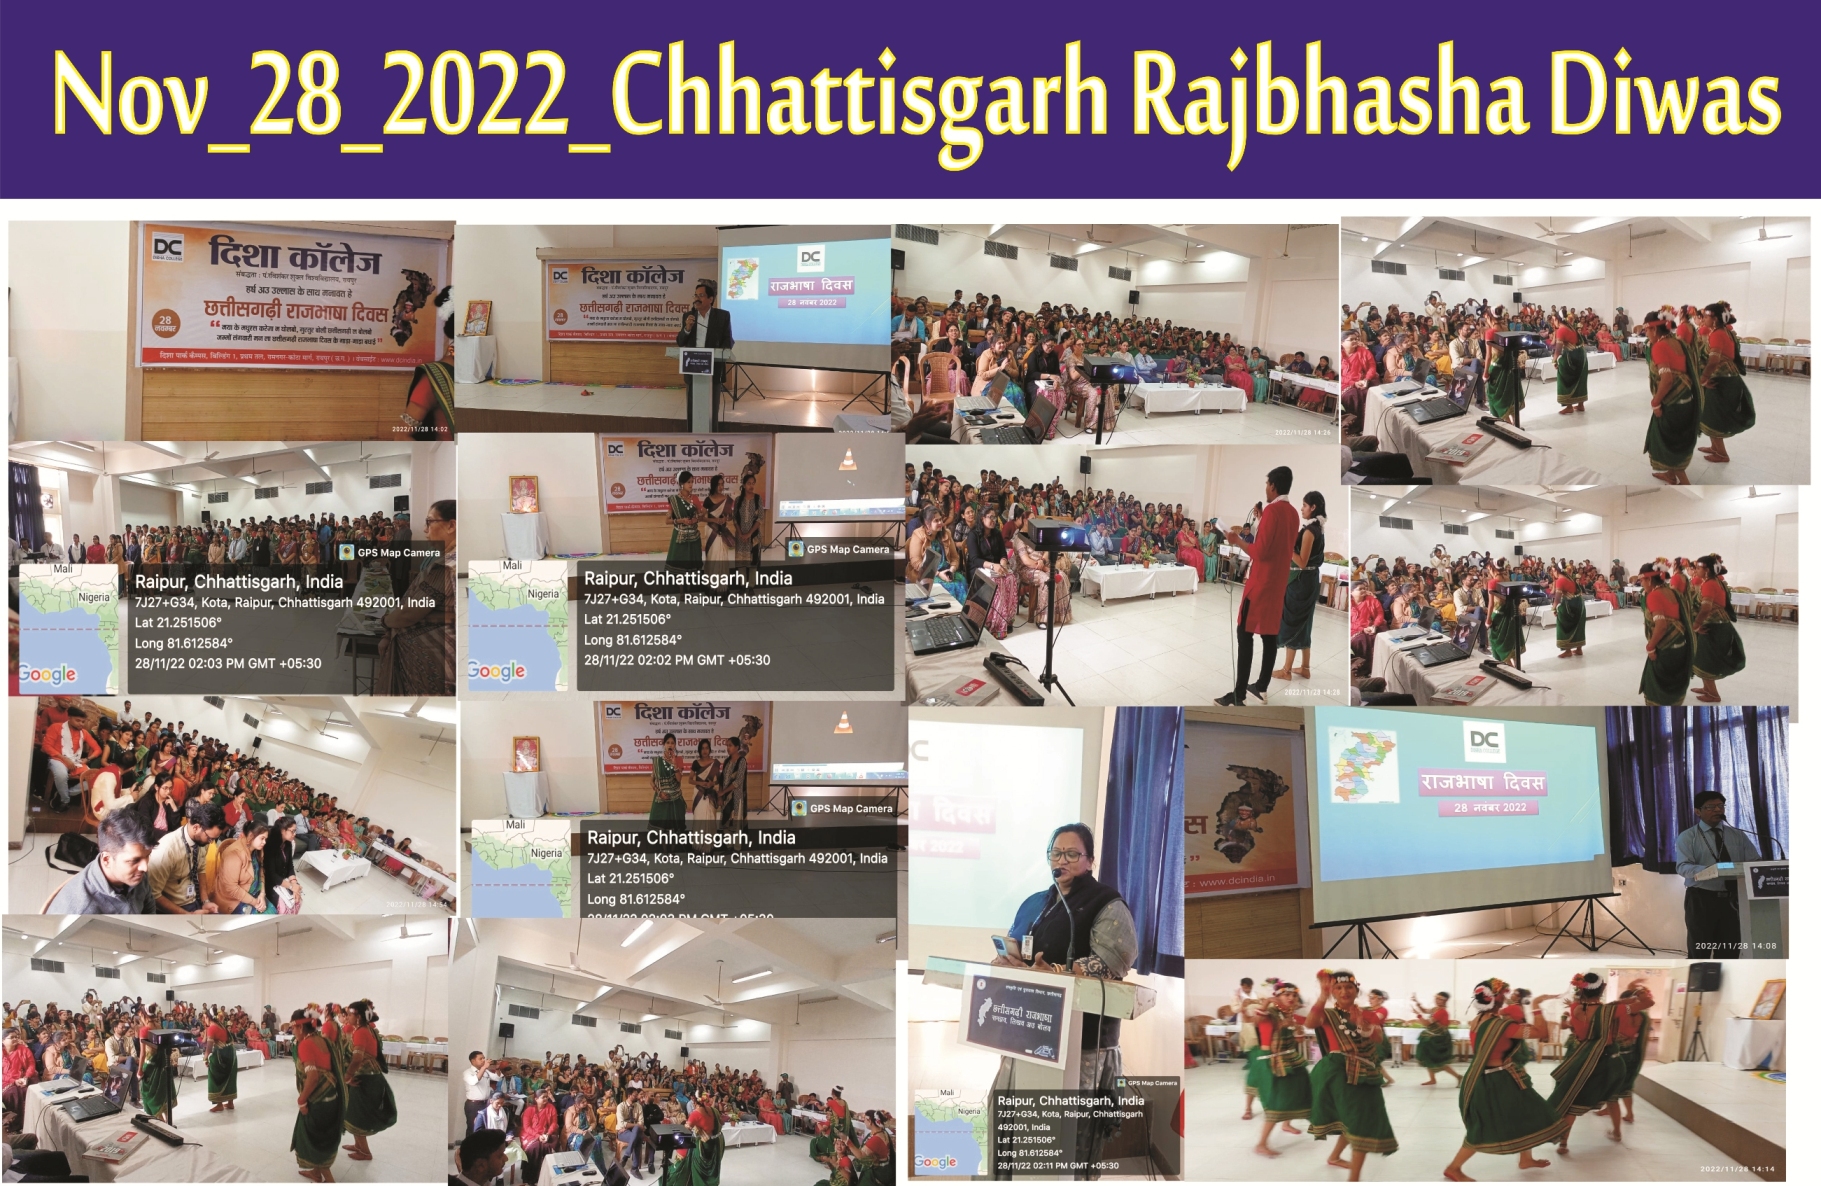 Chhatishgarh Rajbhasha Diwas